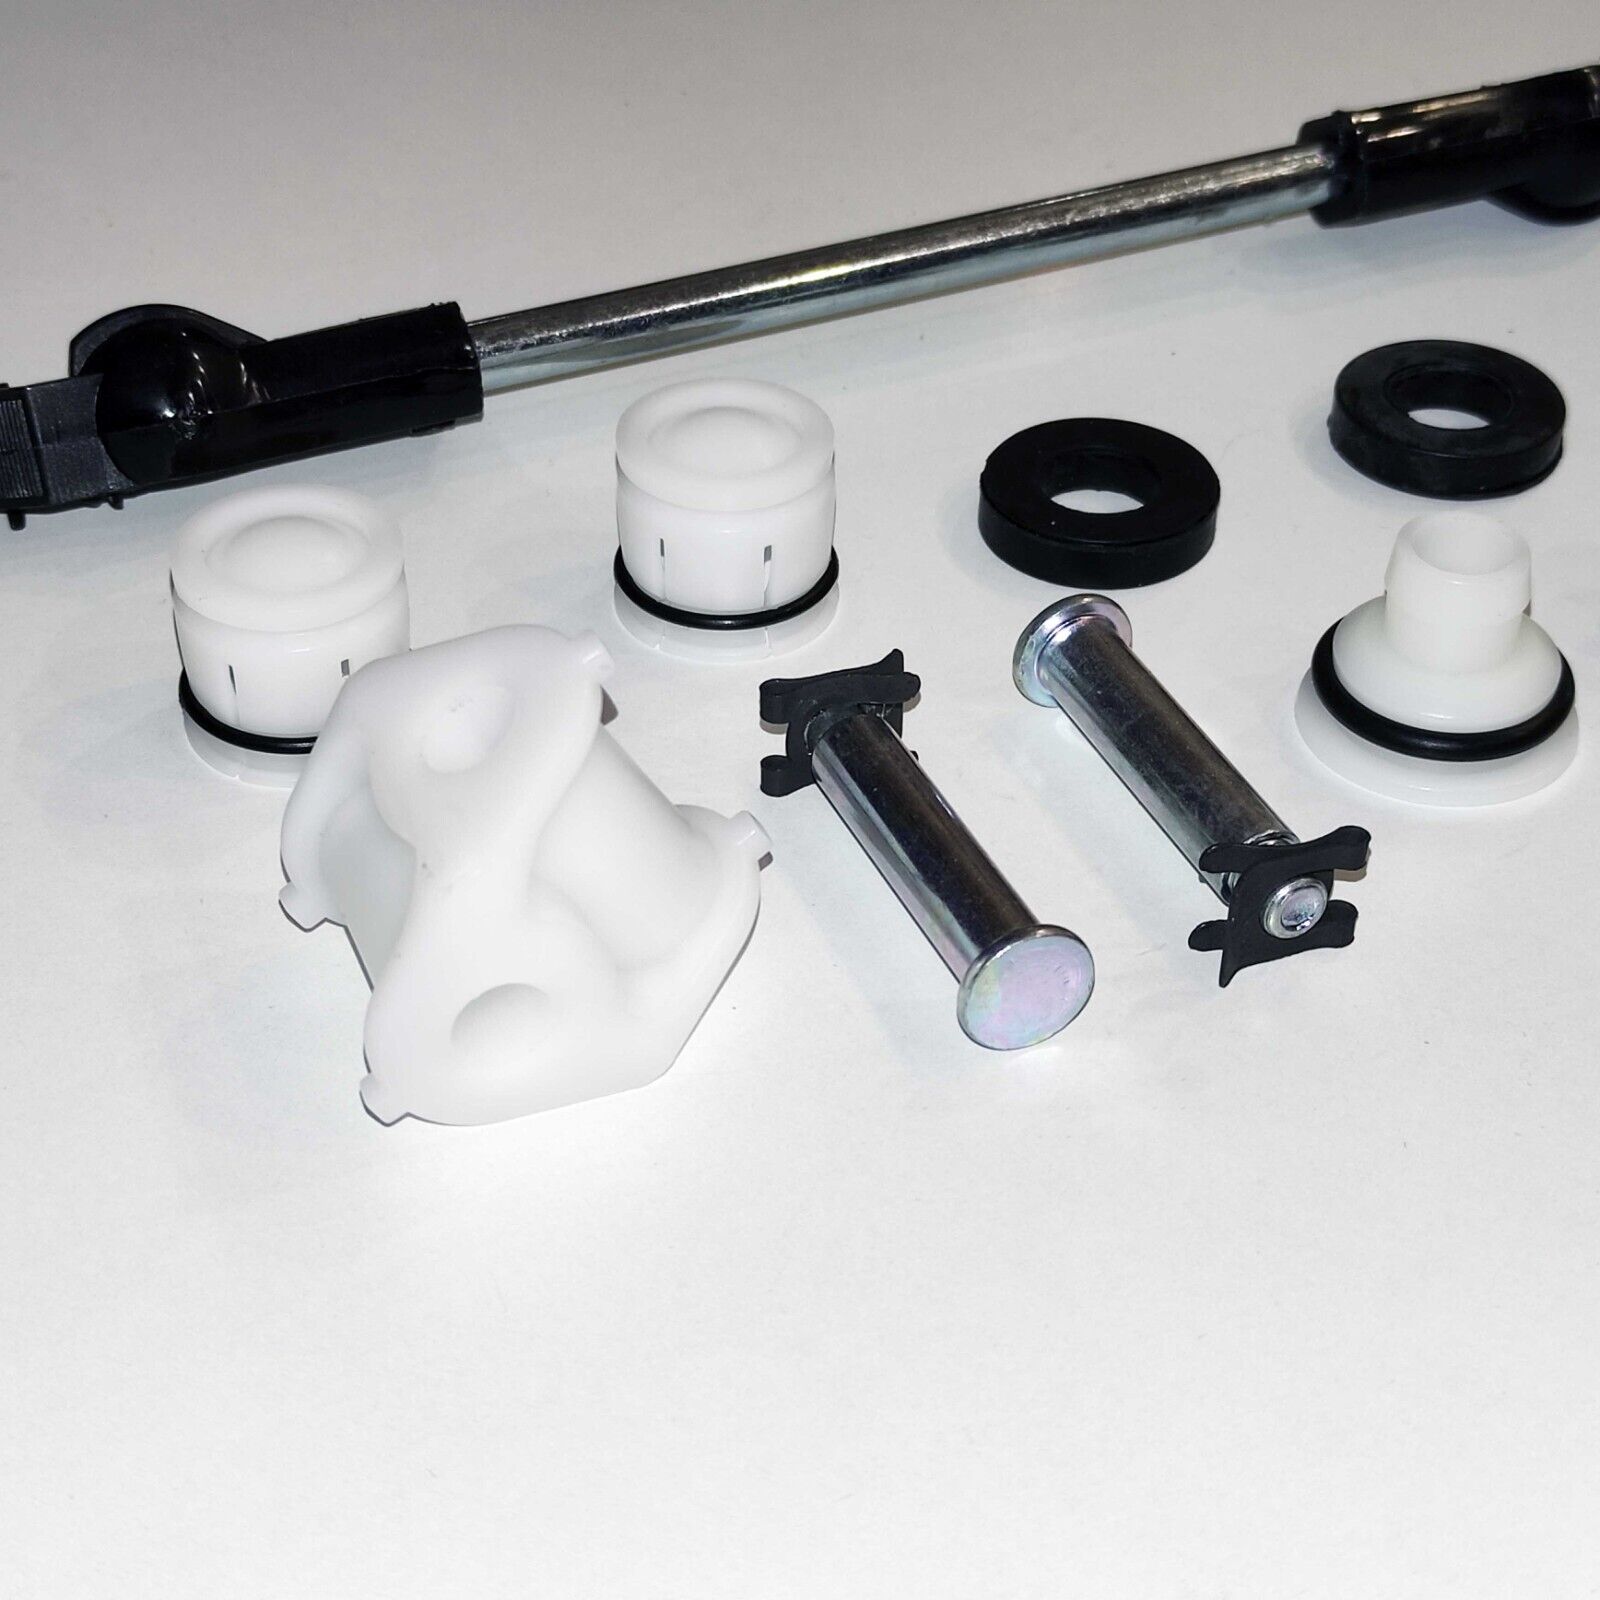 For Opel Astra/ Vectra/ Kadett Ascona gear repair kit for F13/F16 gearbox